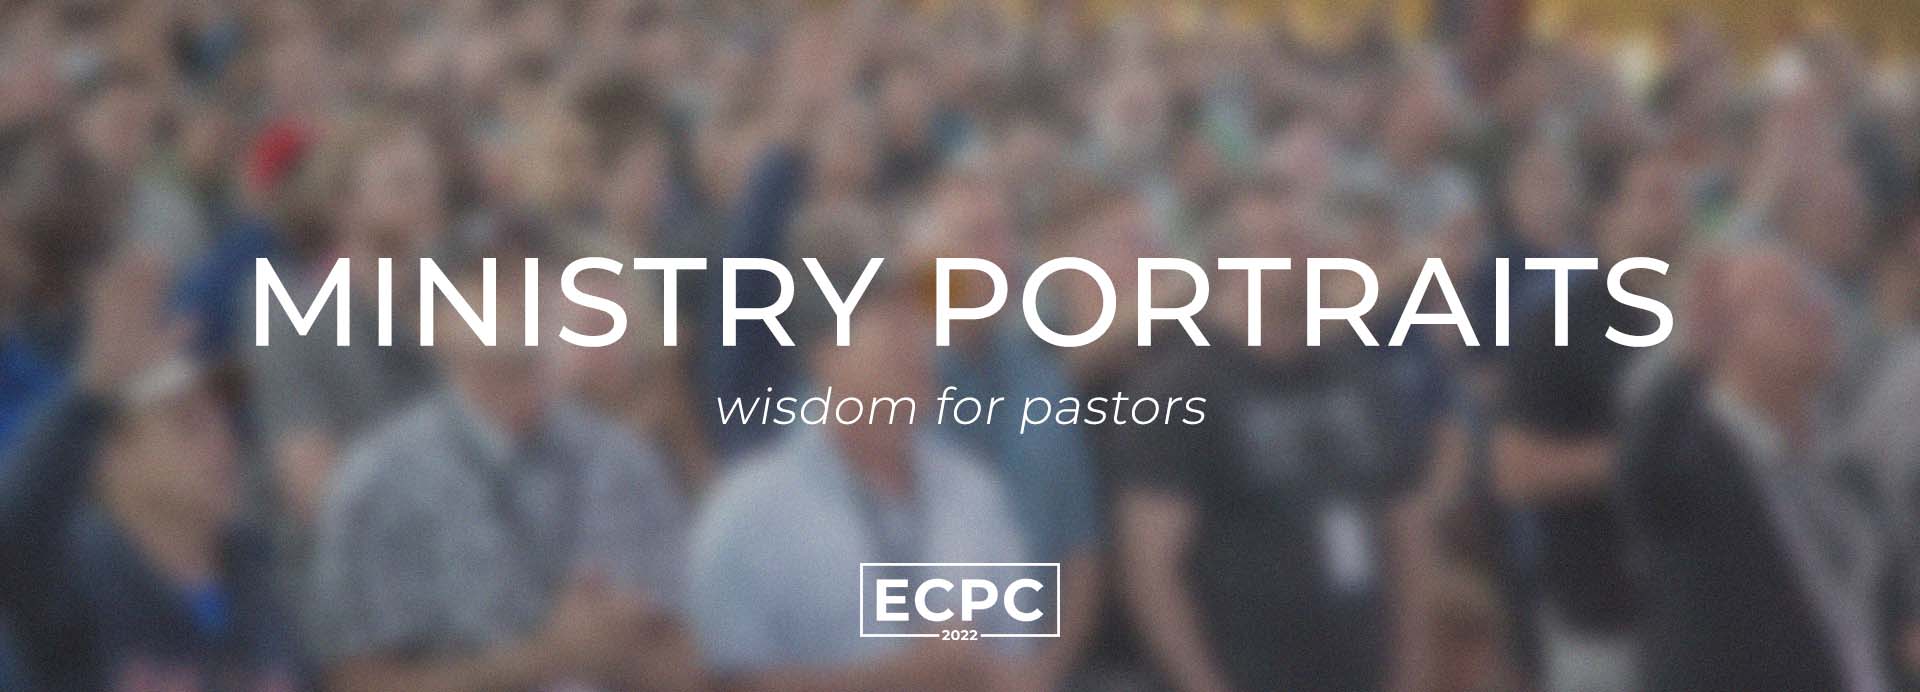 Ministry Portraits - Wisdom for Pastors